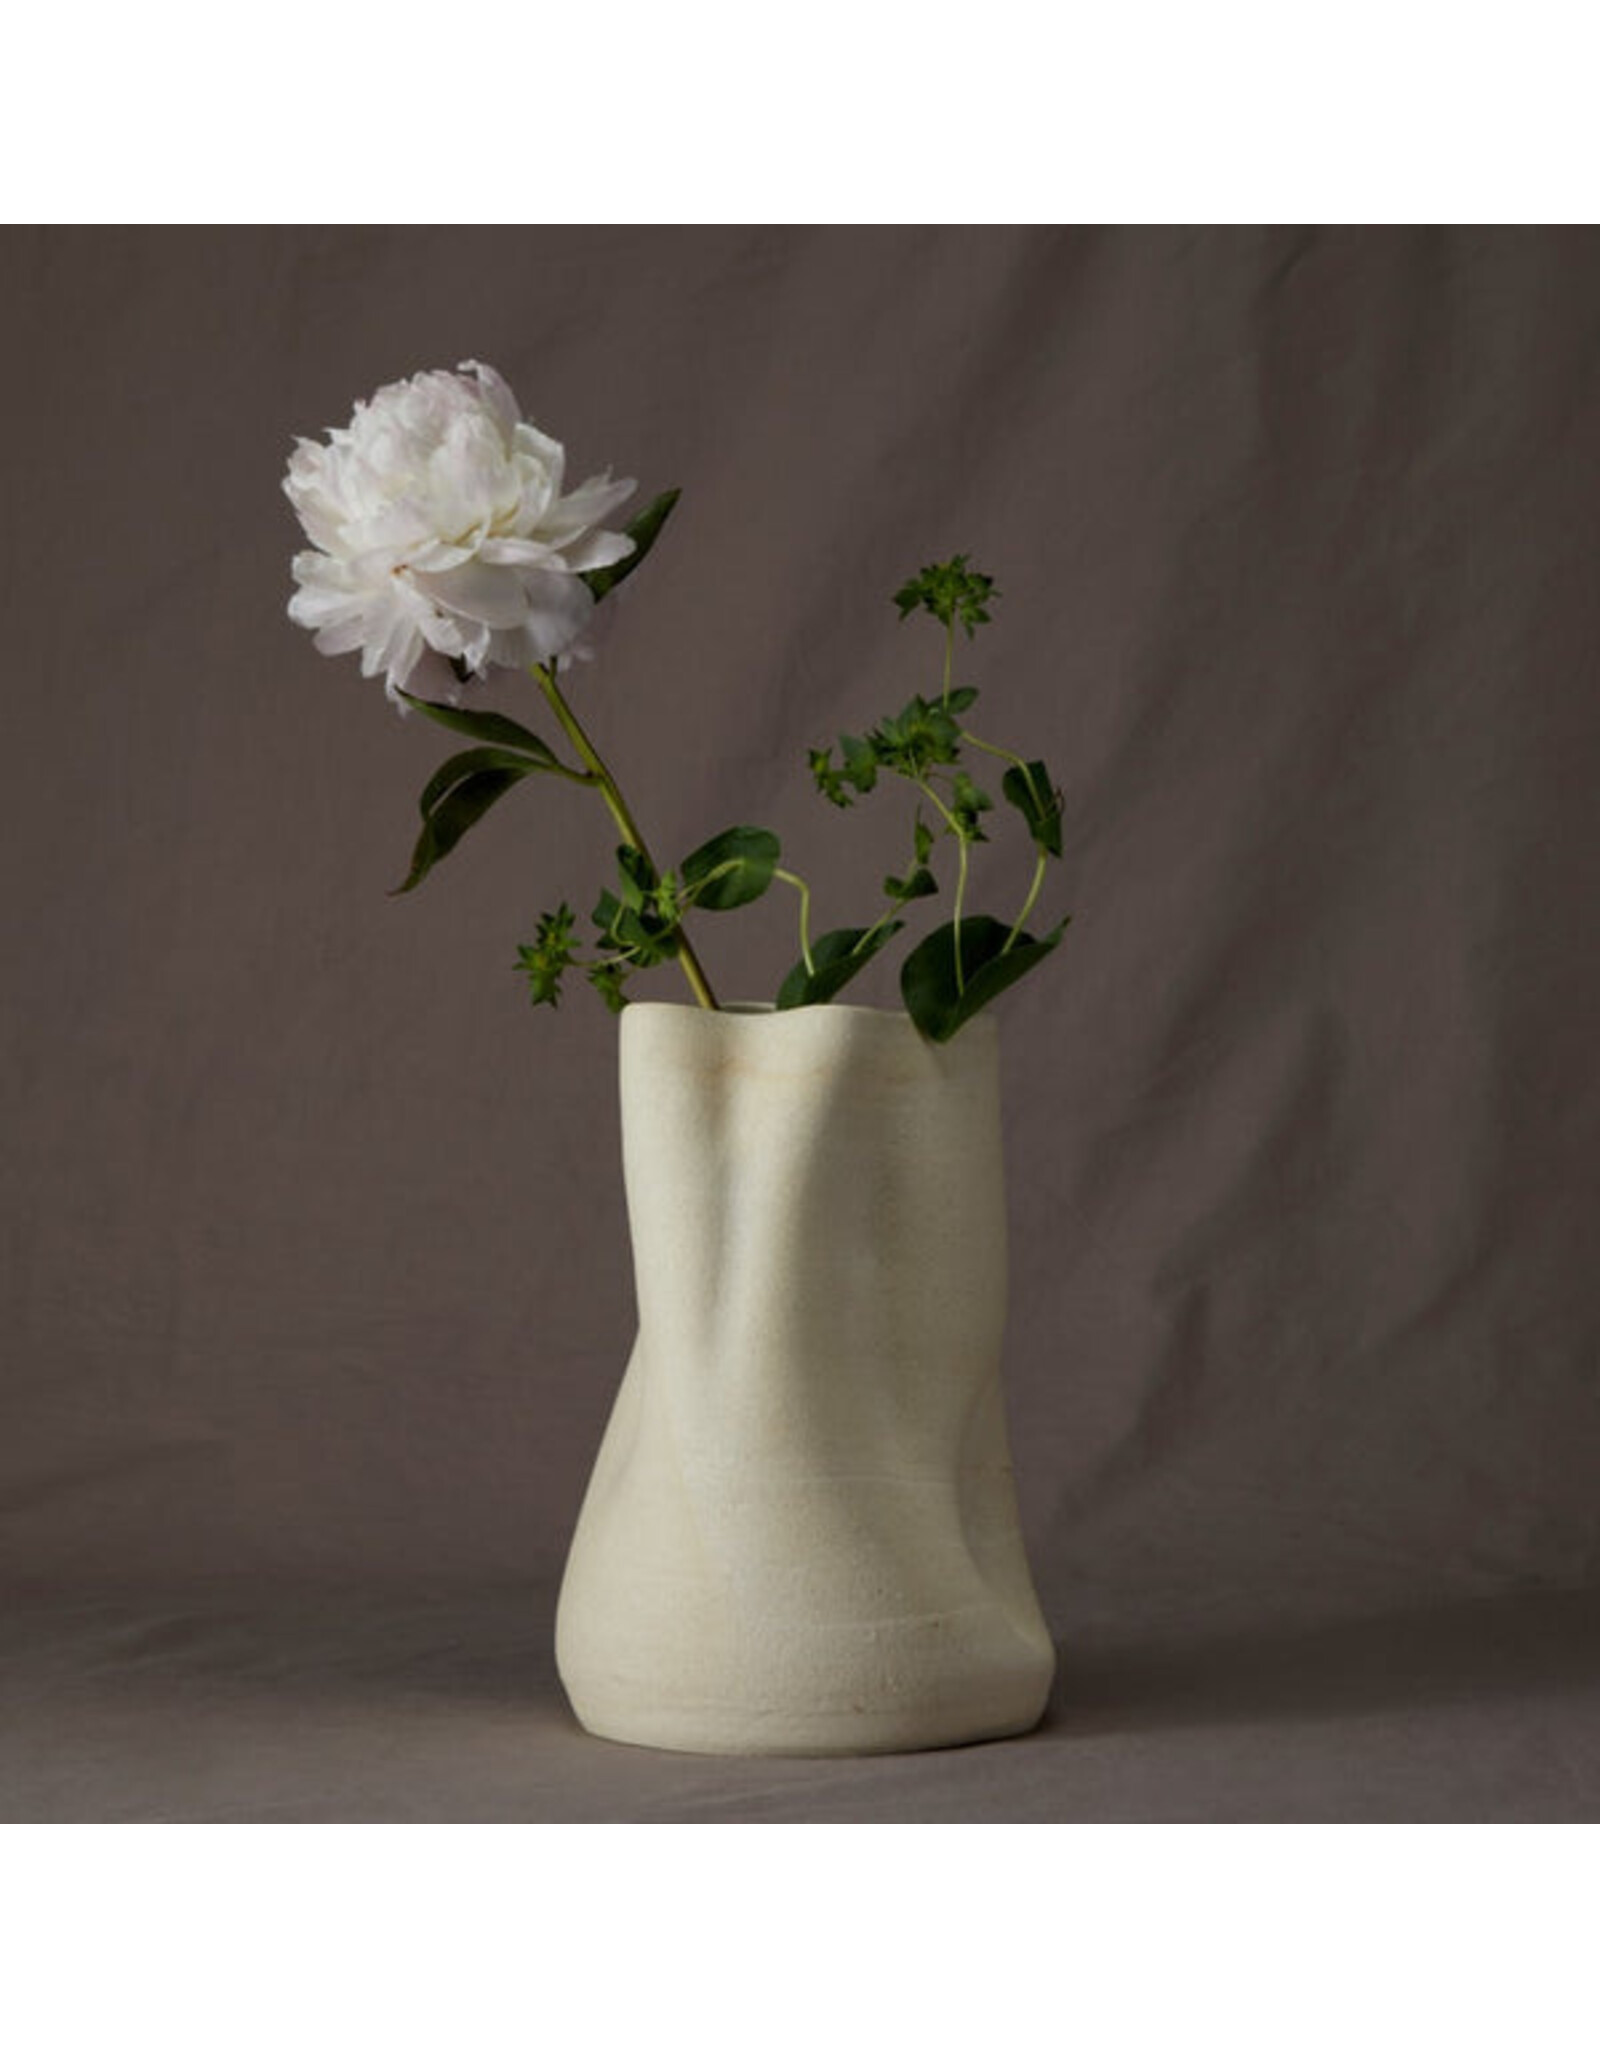 Everly Vase Raw Blanc L